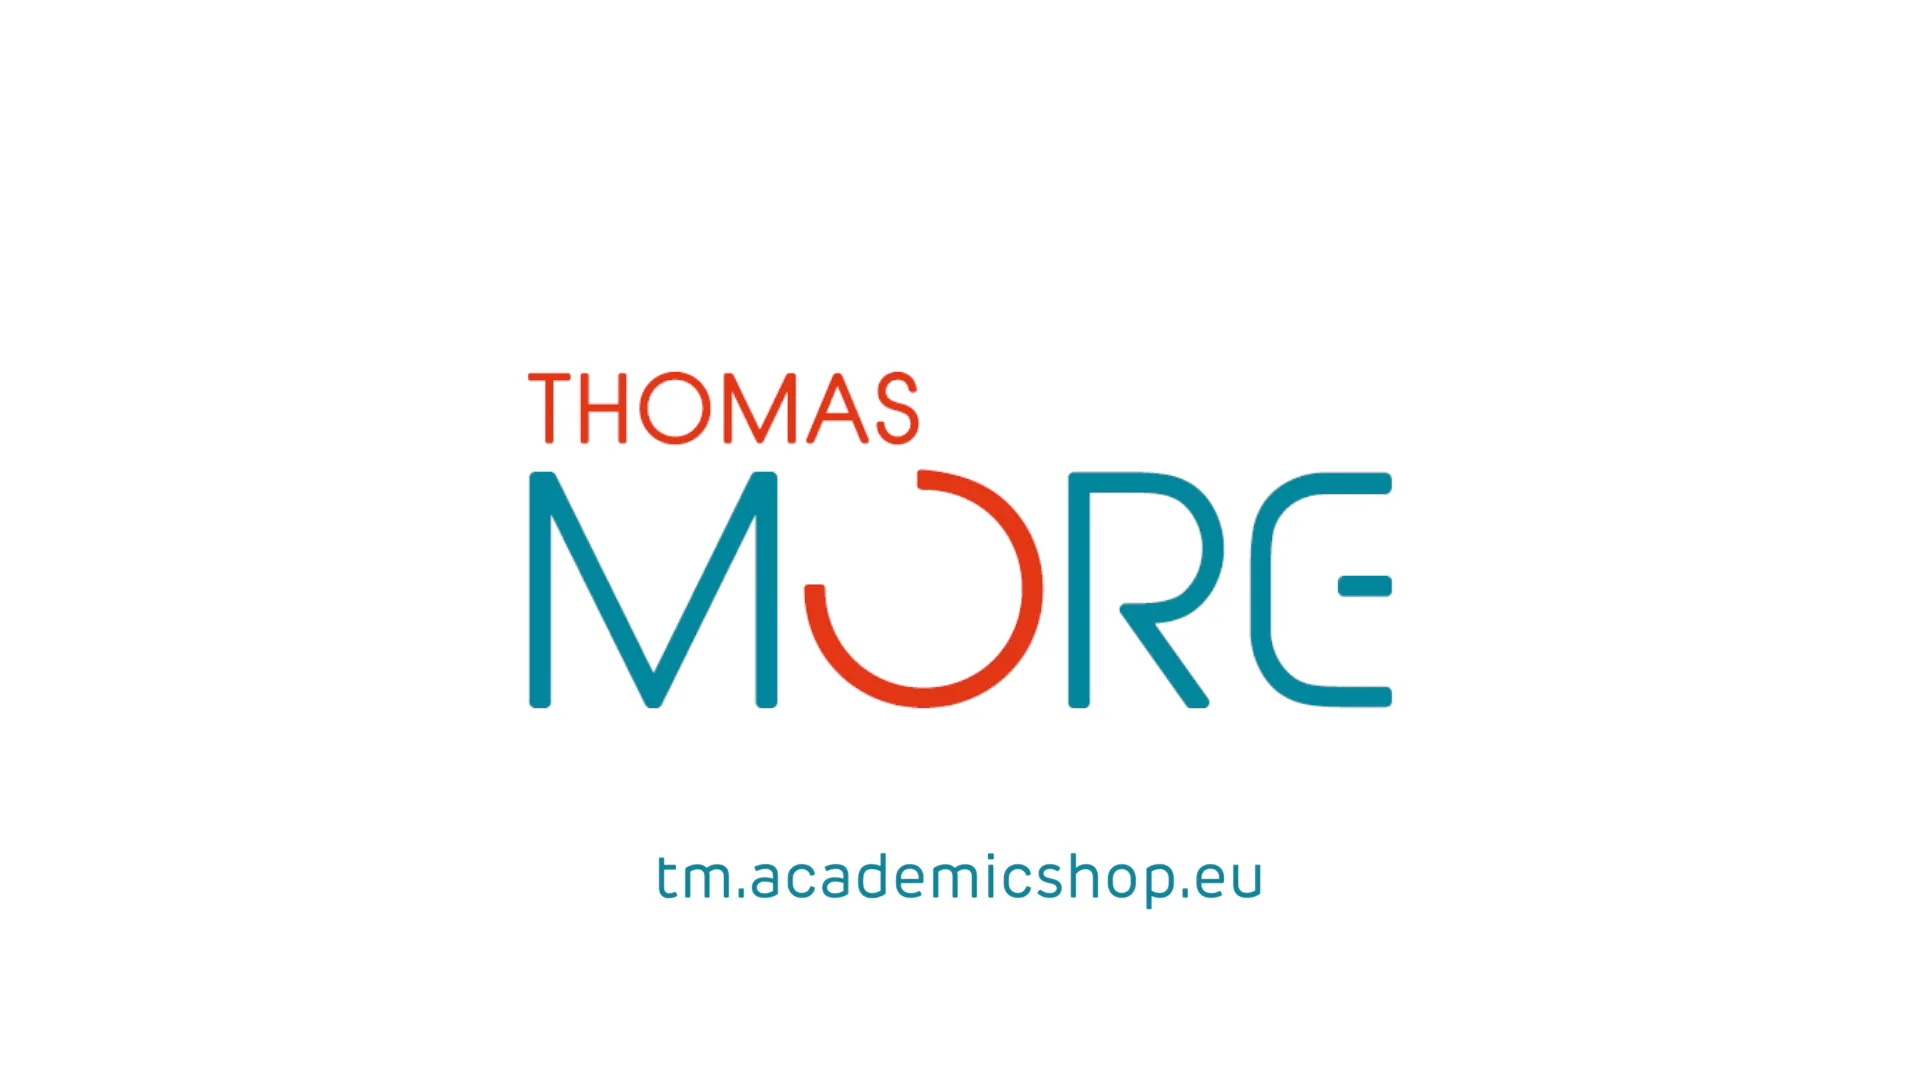 thomas-more-academic-shop-on-vimeo